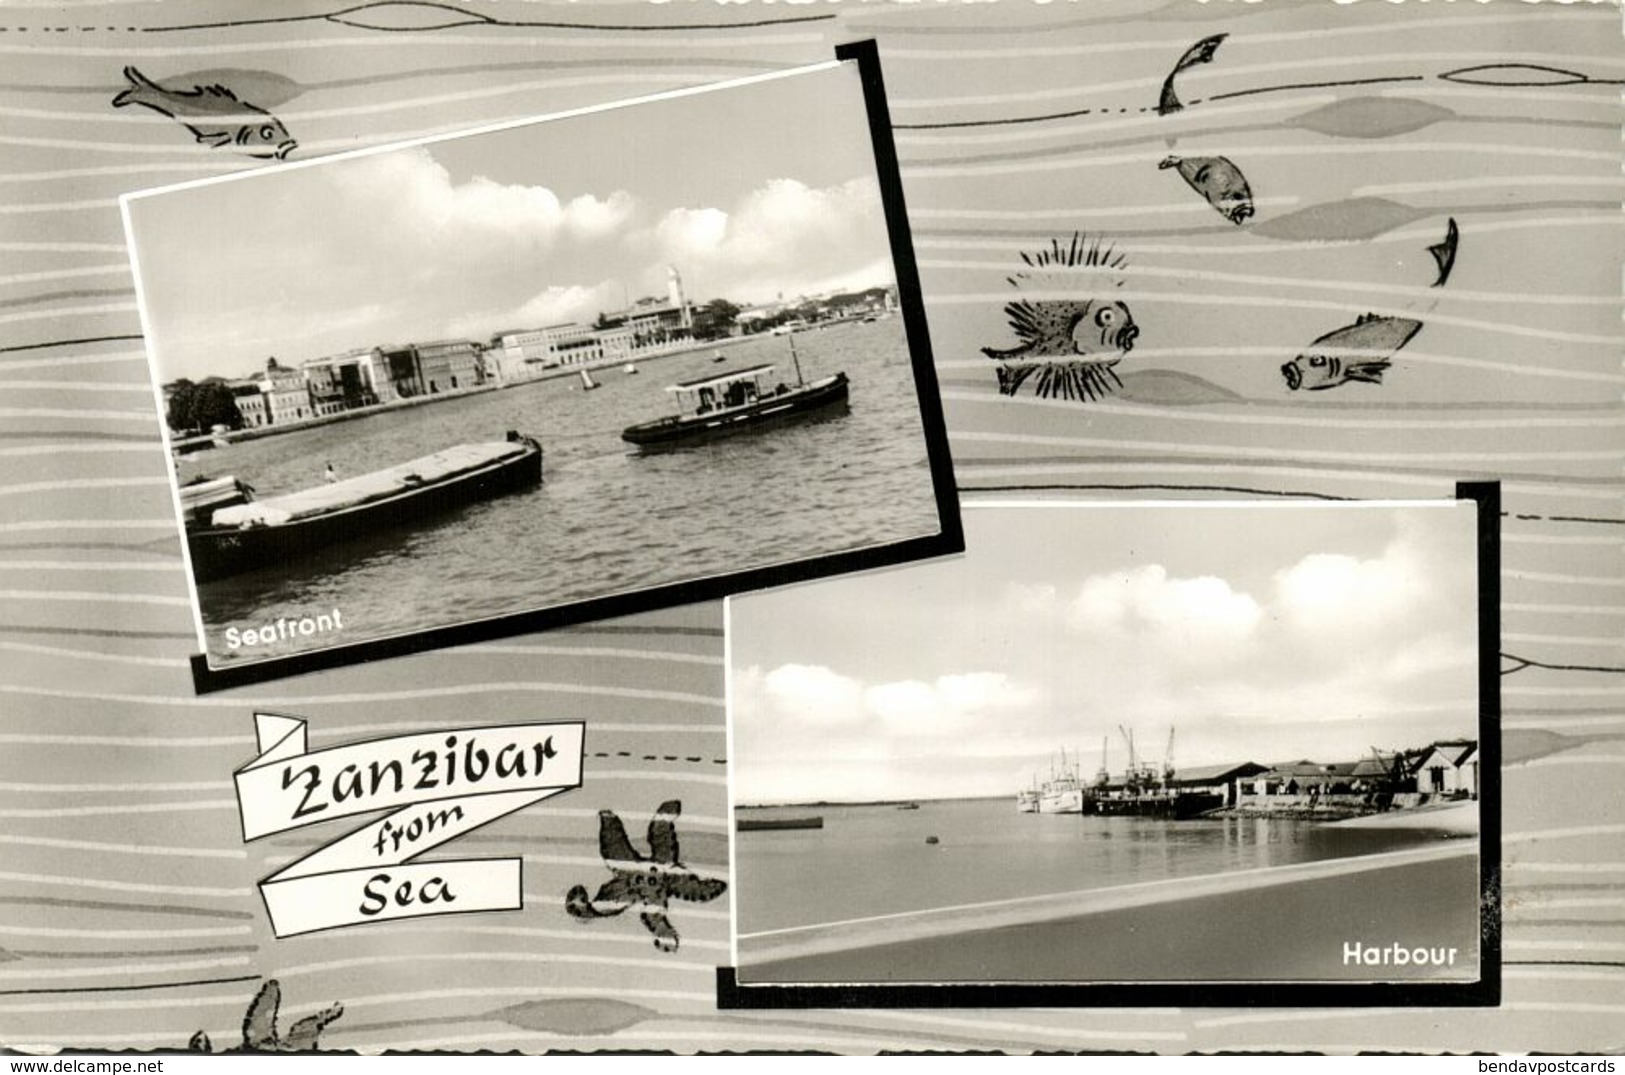 Tanzania, ZANZIBAR, Seafront, Harbour (1950s) RPPC - Tanzania